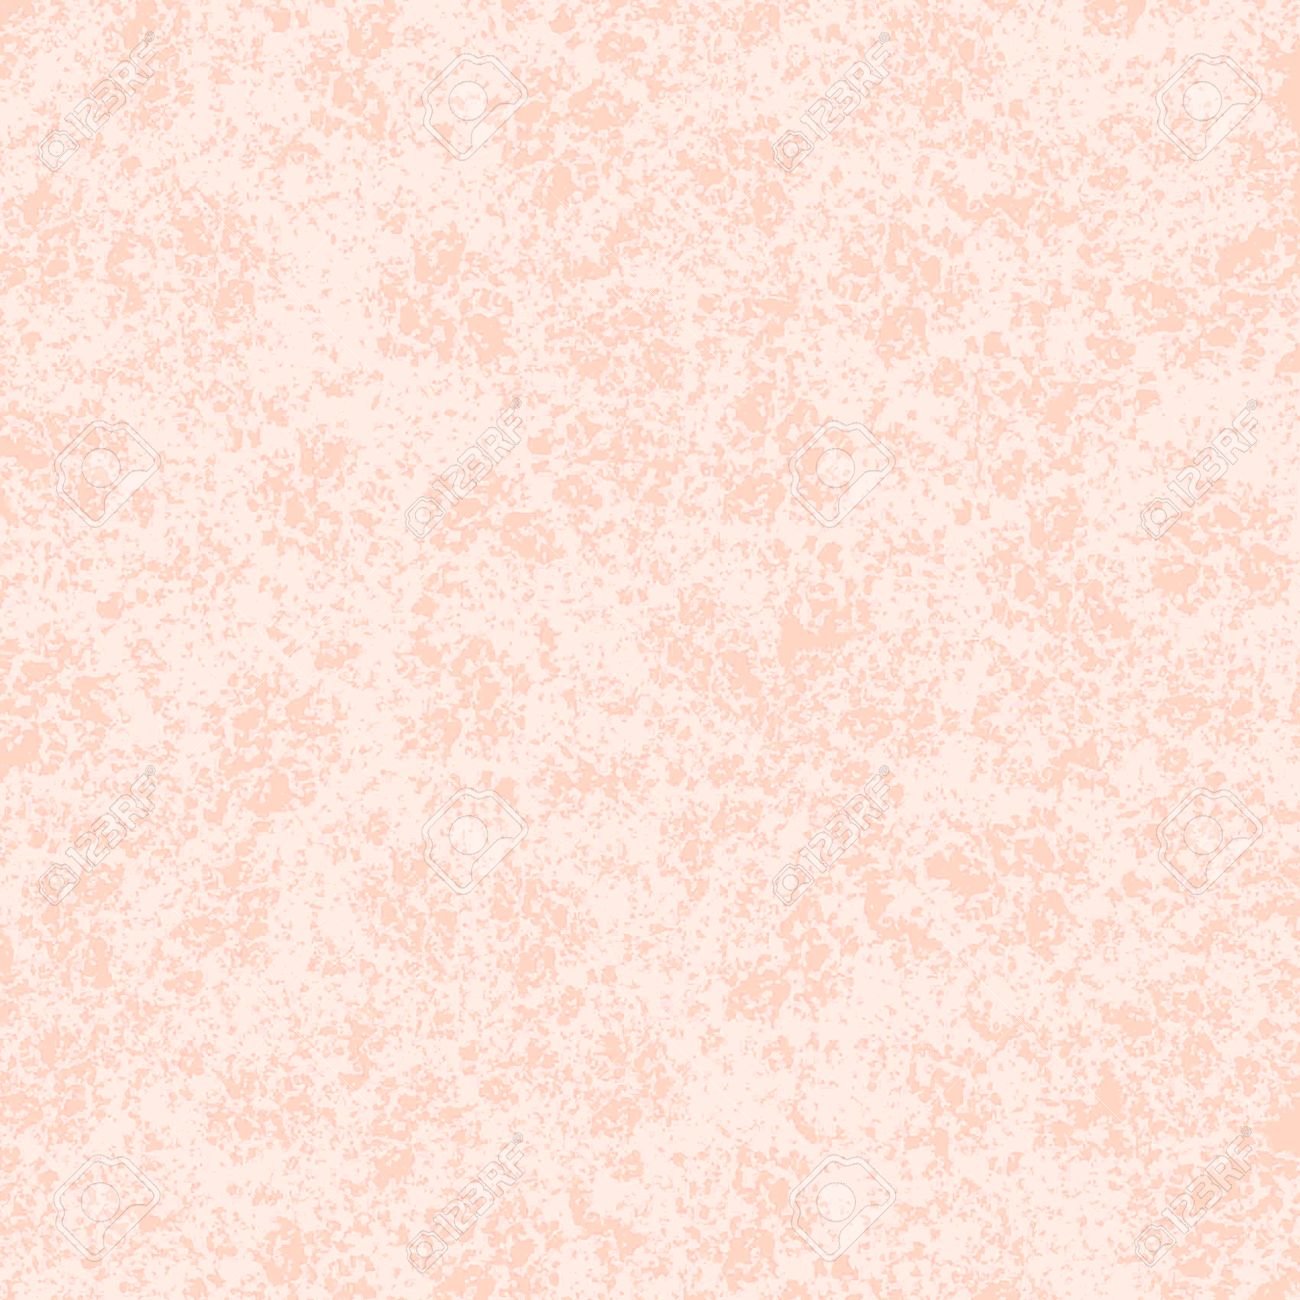 Soft Peach Orange Background With White Sponge Texture Stock Photo